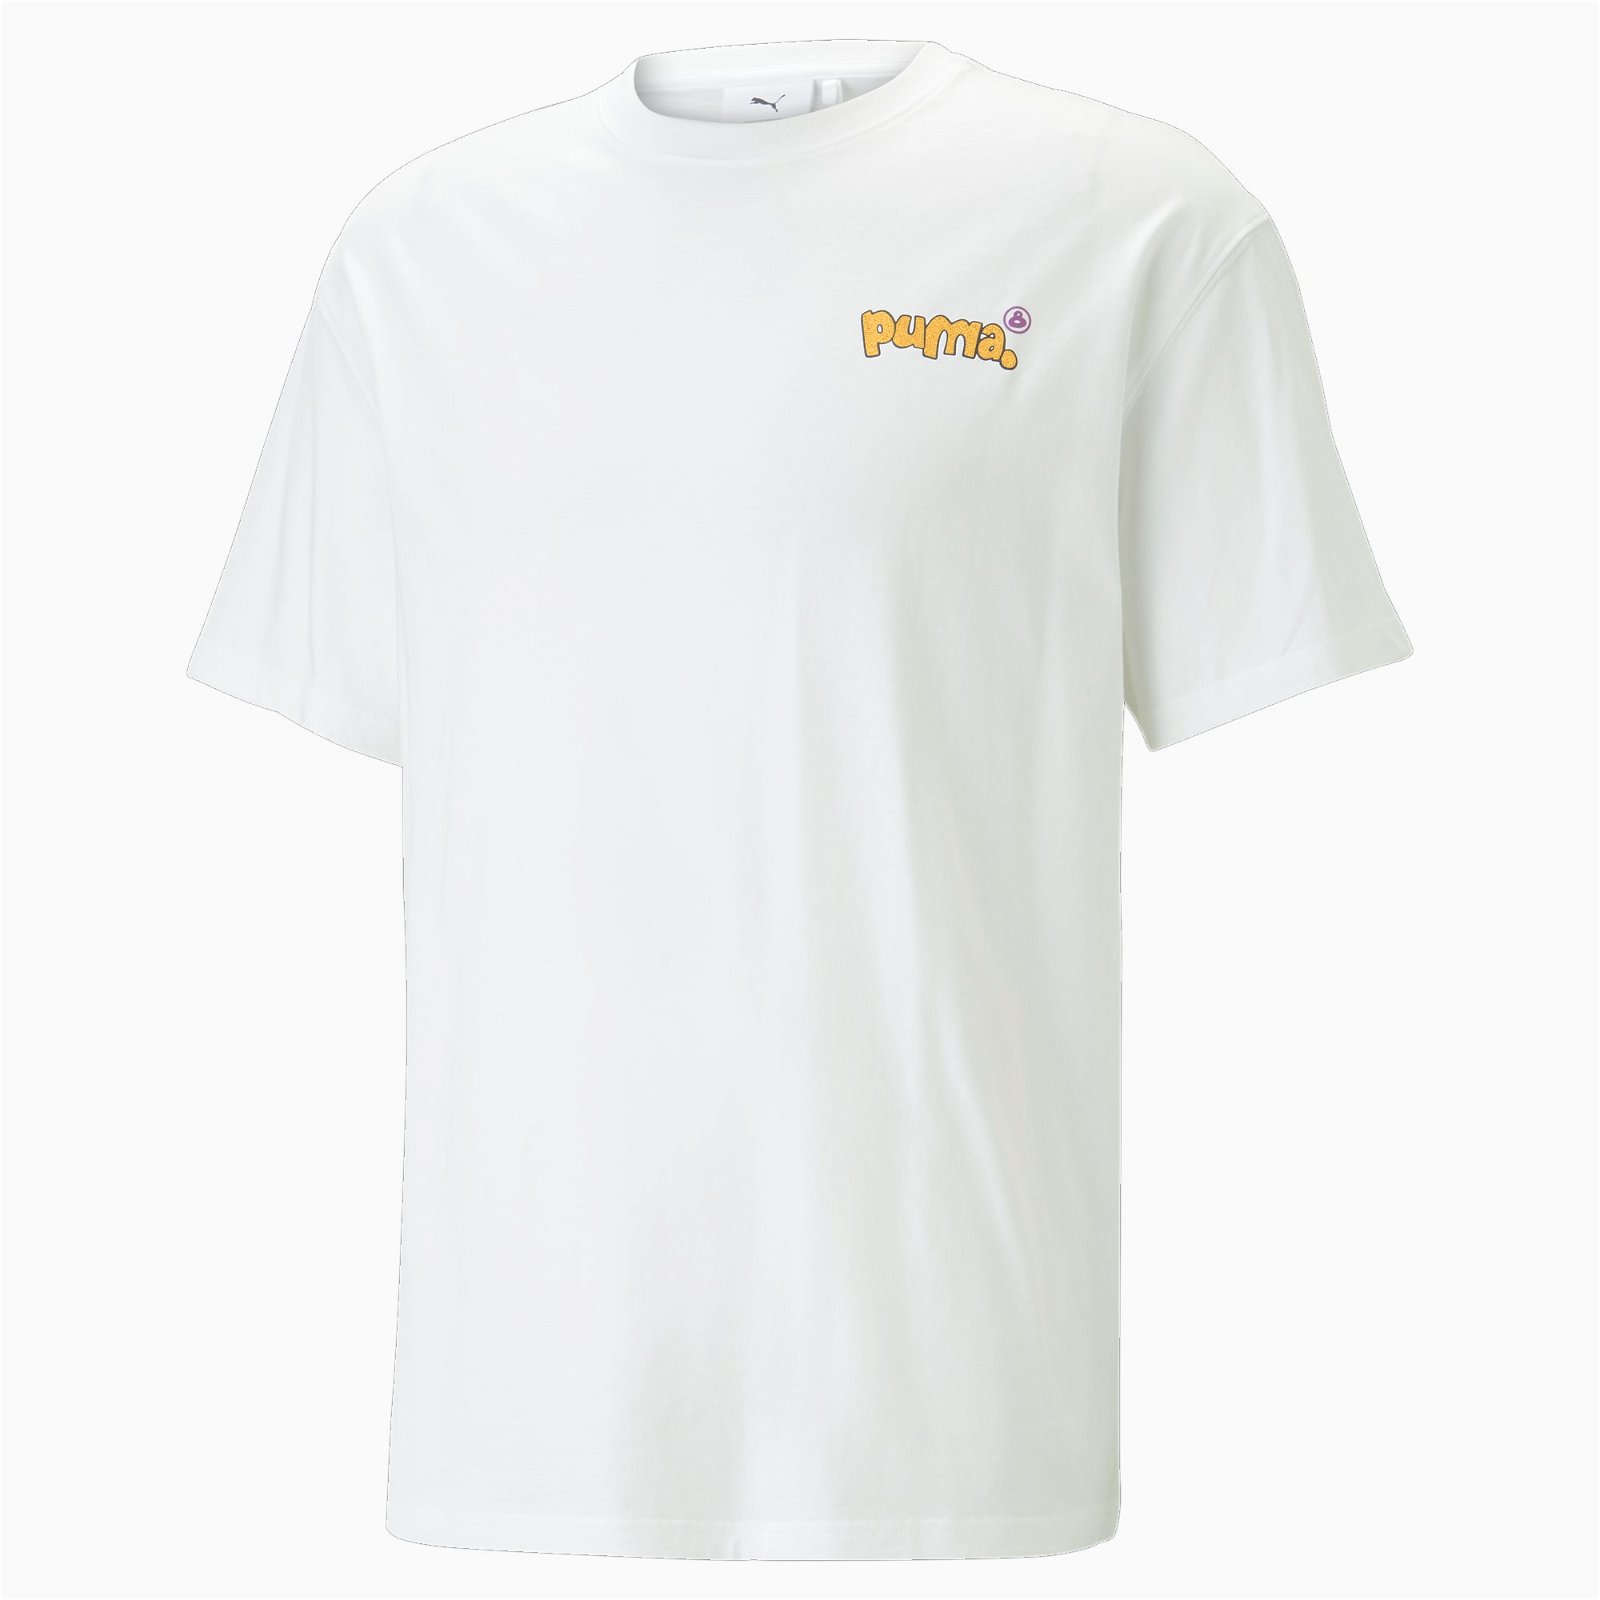 X 8ENJAMIN Graphic T-Shirt